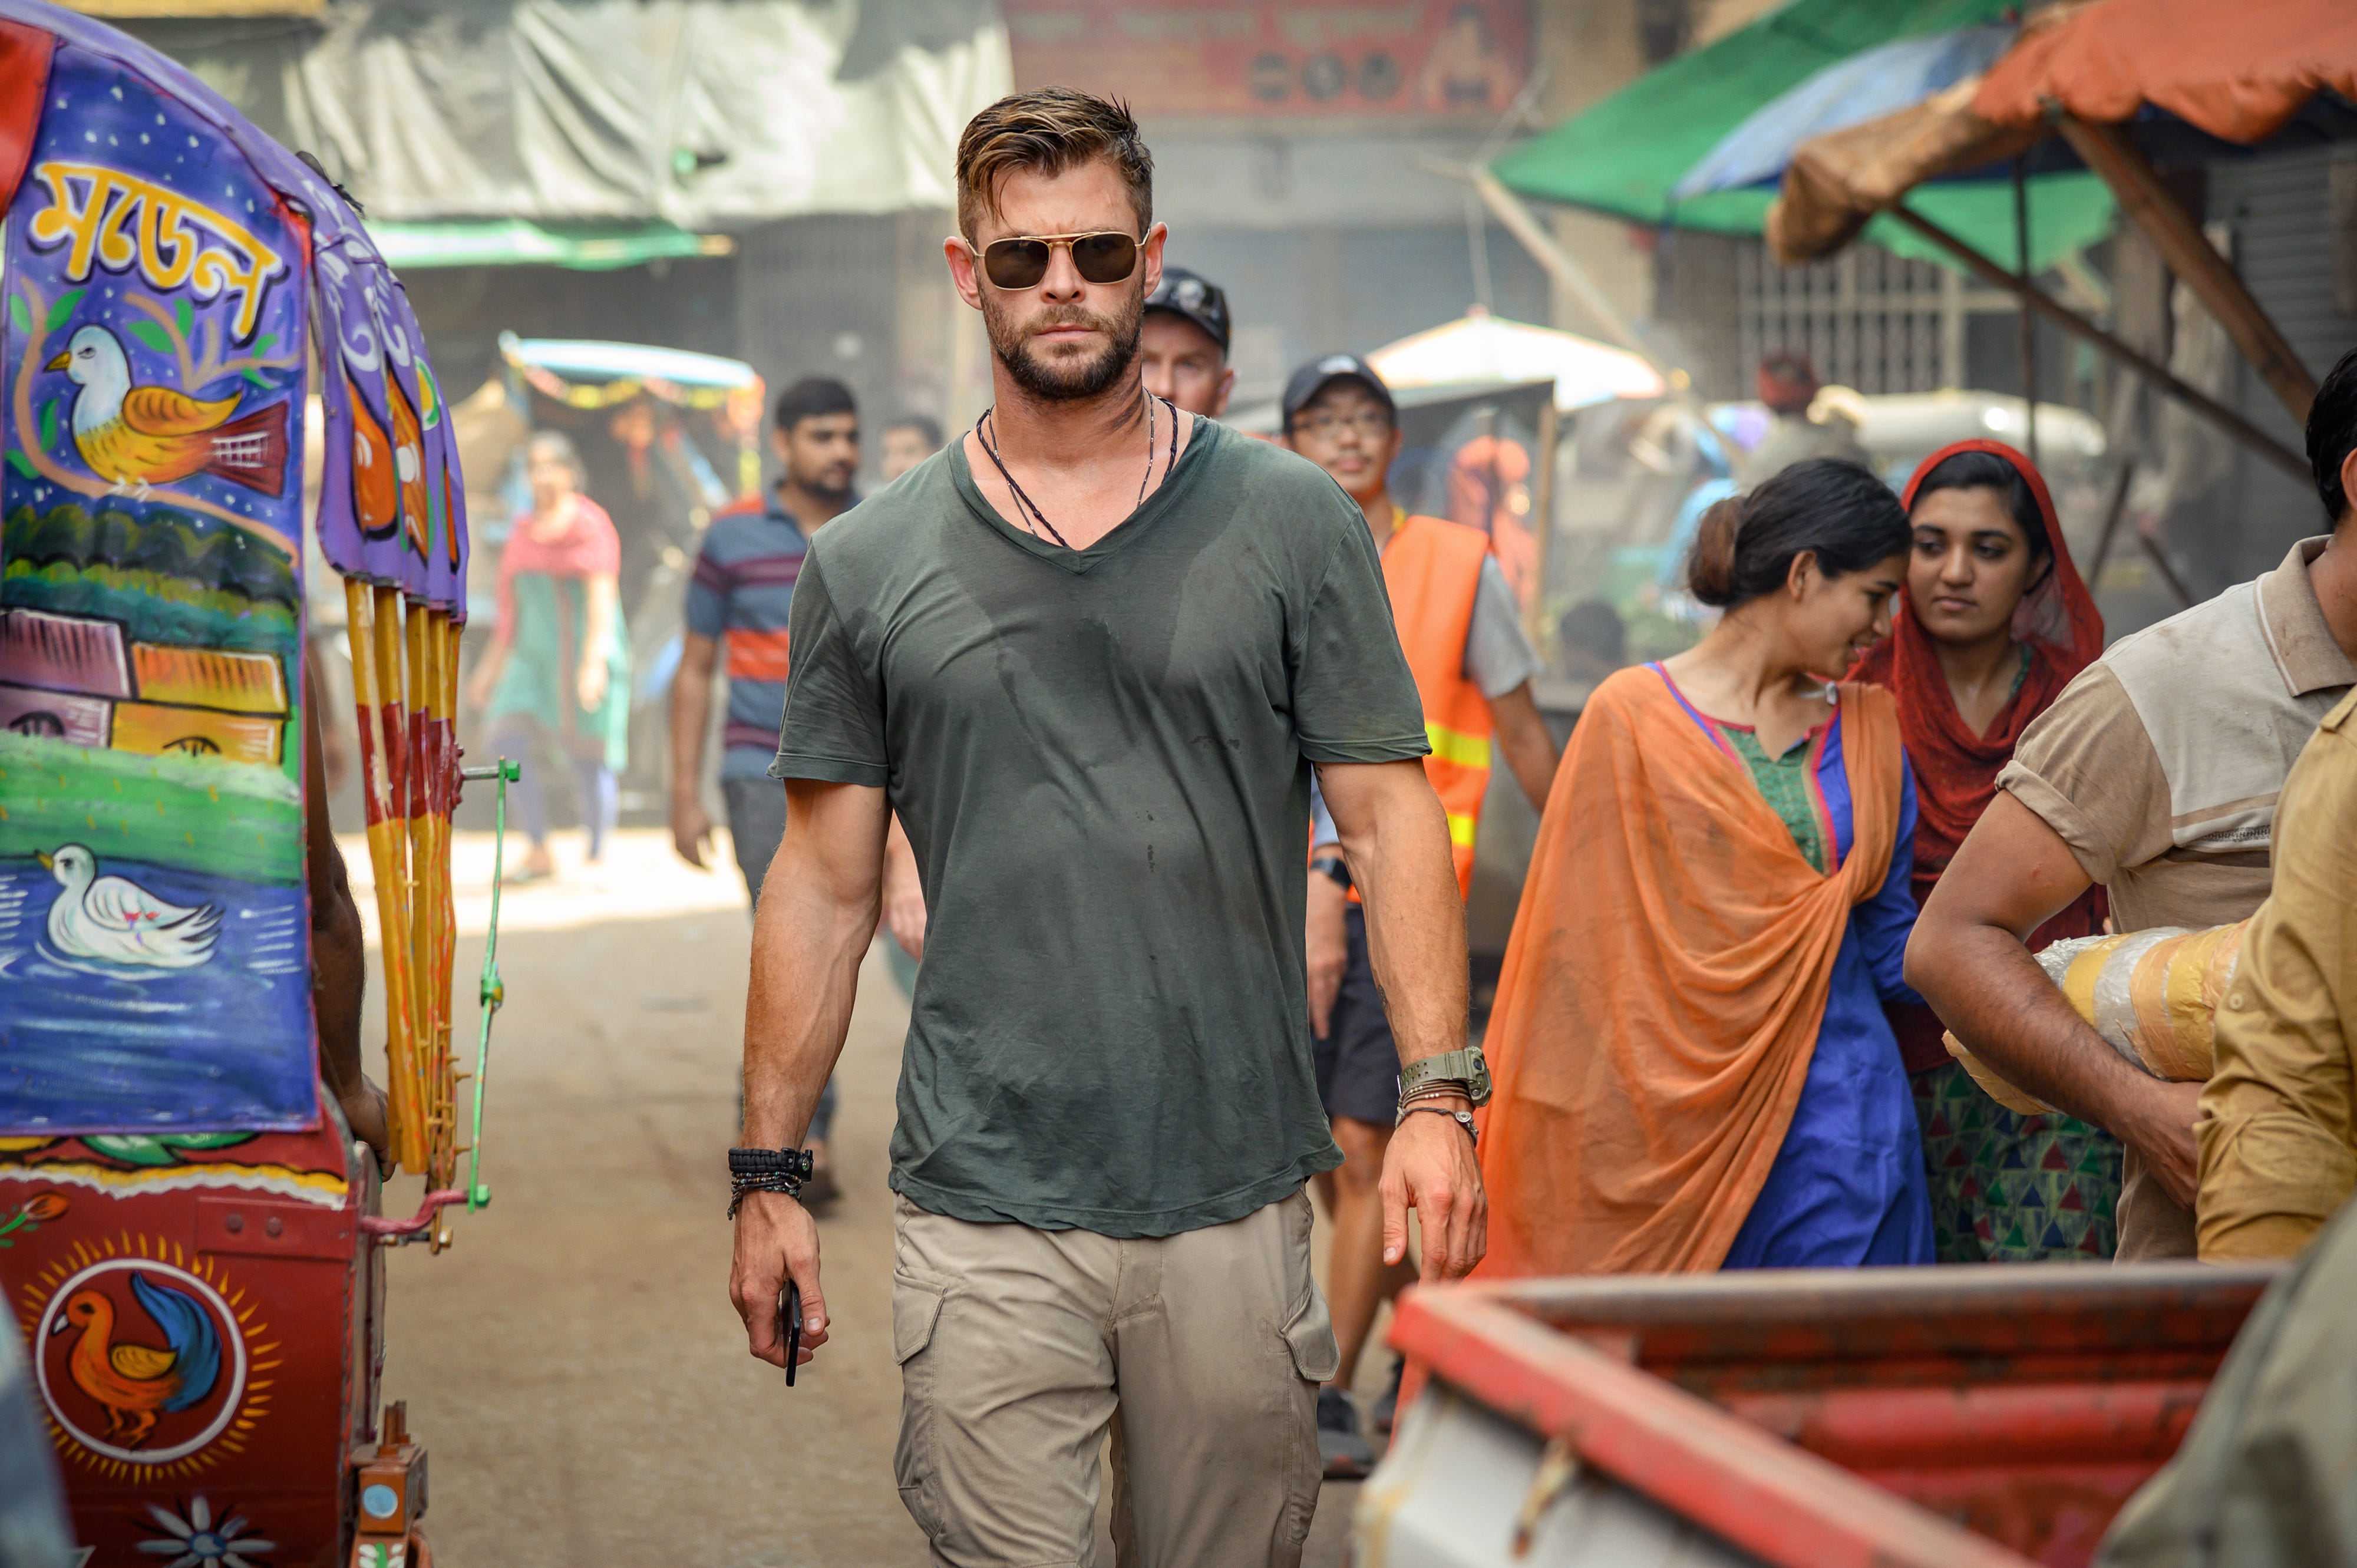 Chris Hemsworth: See exclusive photo of new Netflix film 'Extraction'